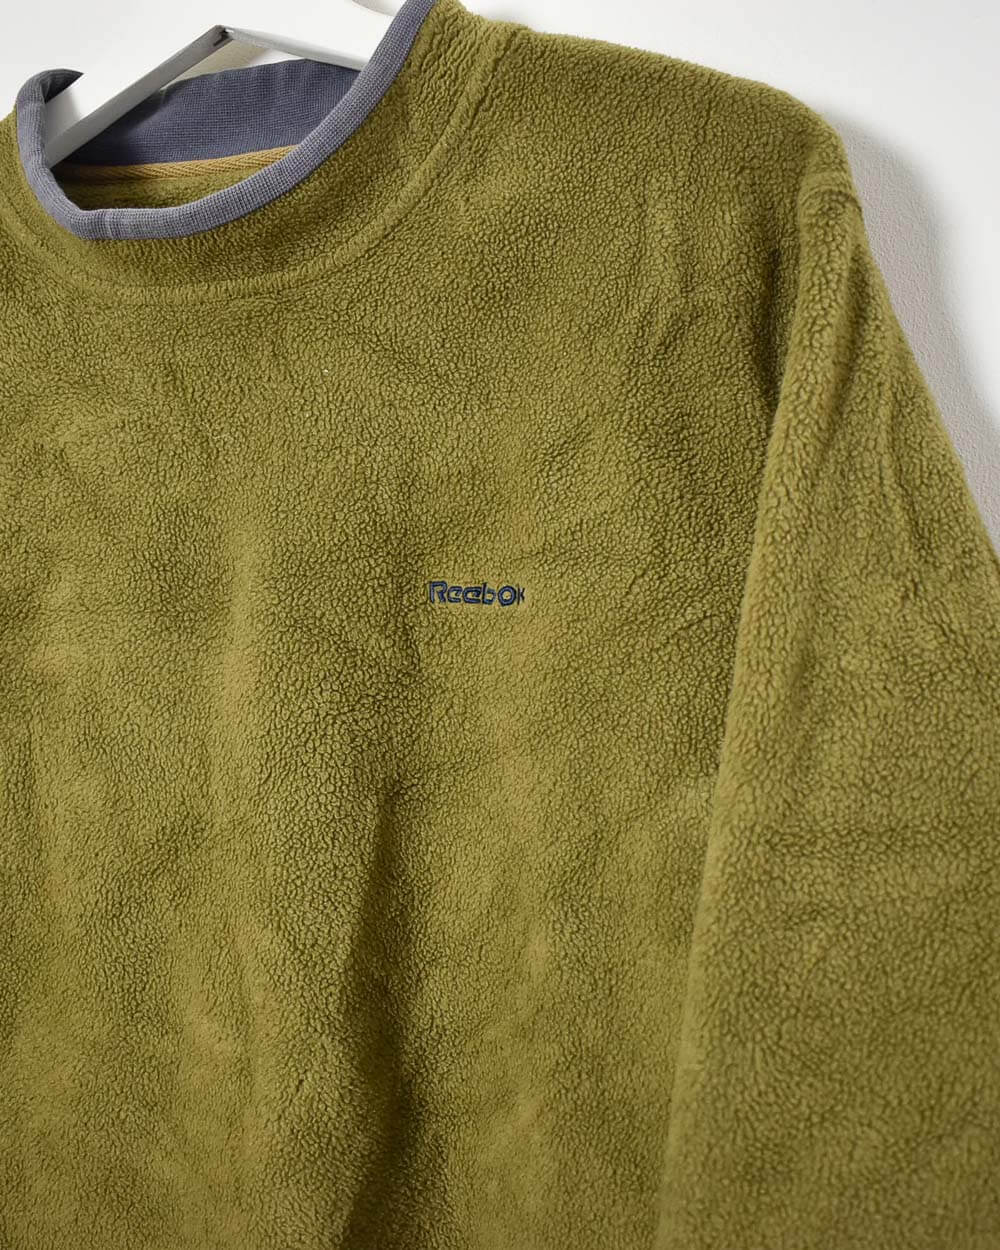 Khaki Reebok Pullover Fleece - Medium